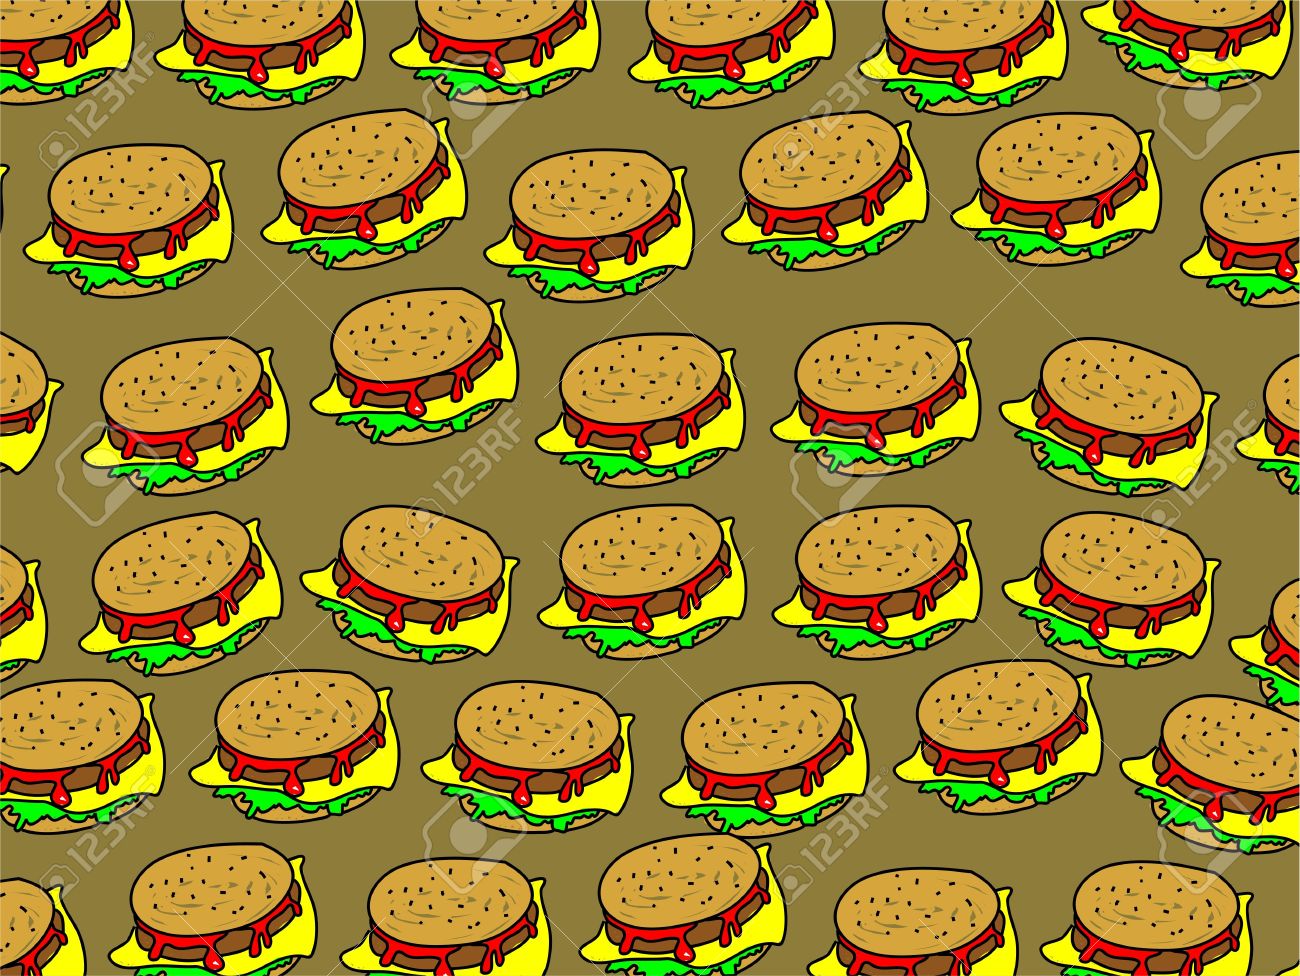 Tasty Salad Cheeseburger Snack Wallpaper Background Design Stock